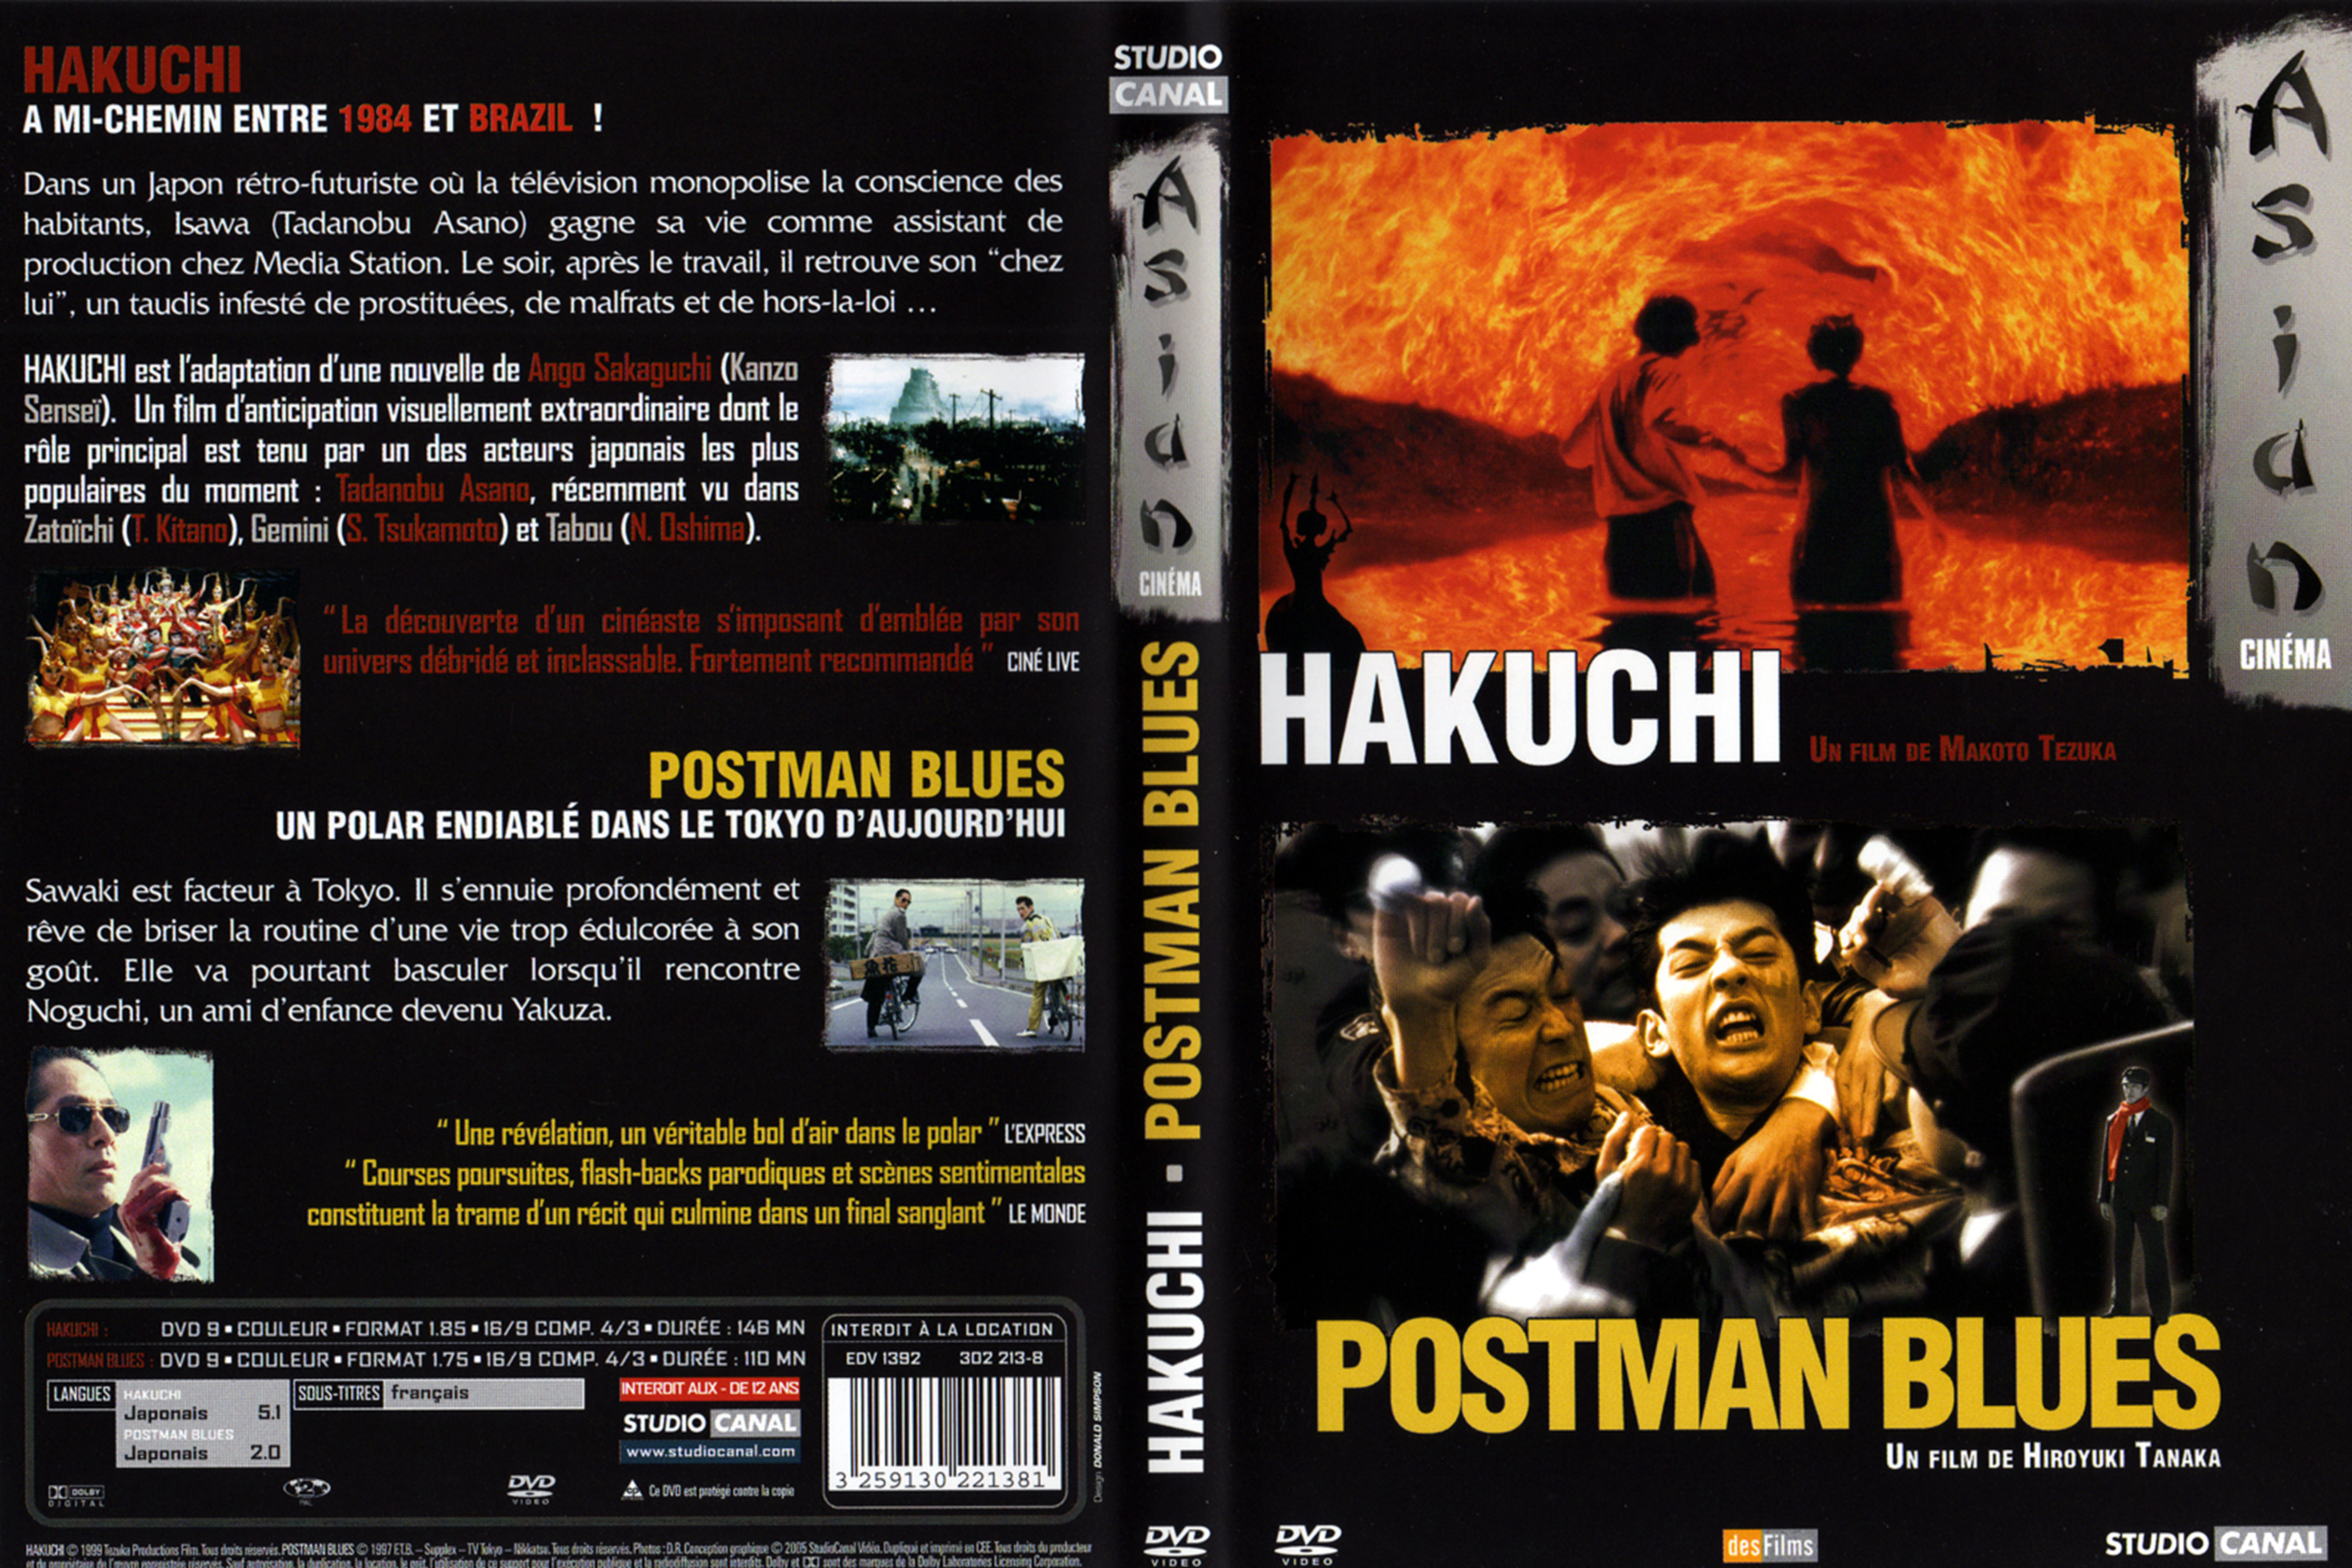 Jaquette DVD Hakuchi + Postman blues